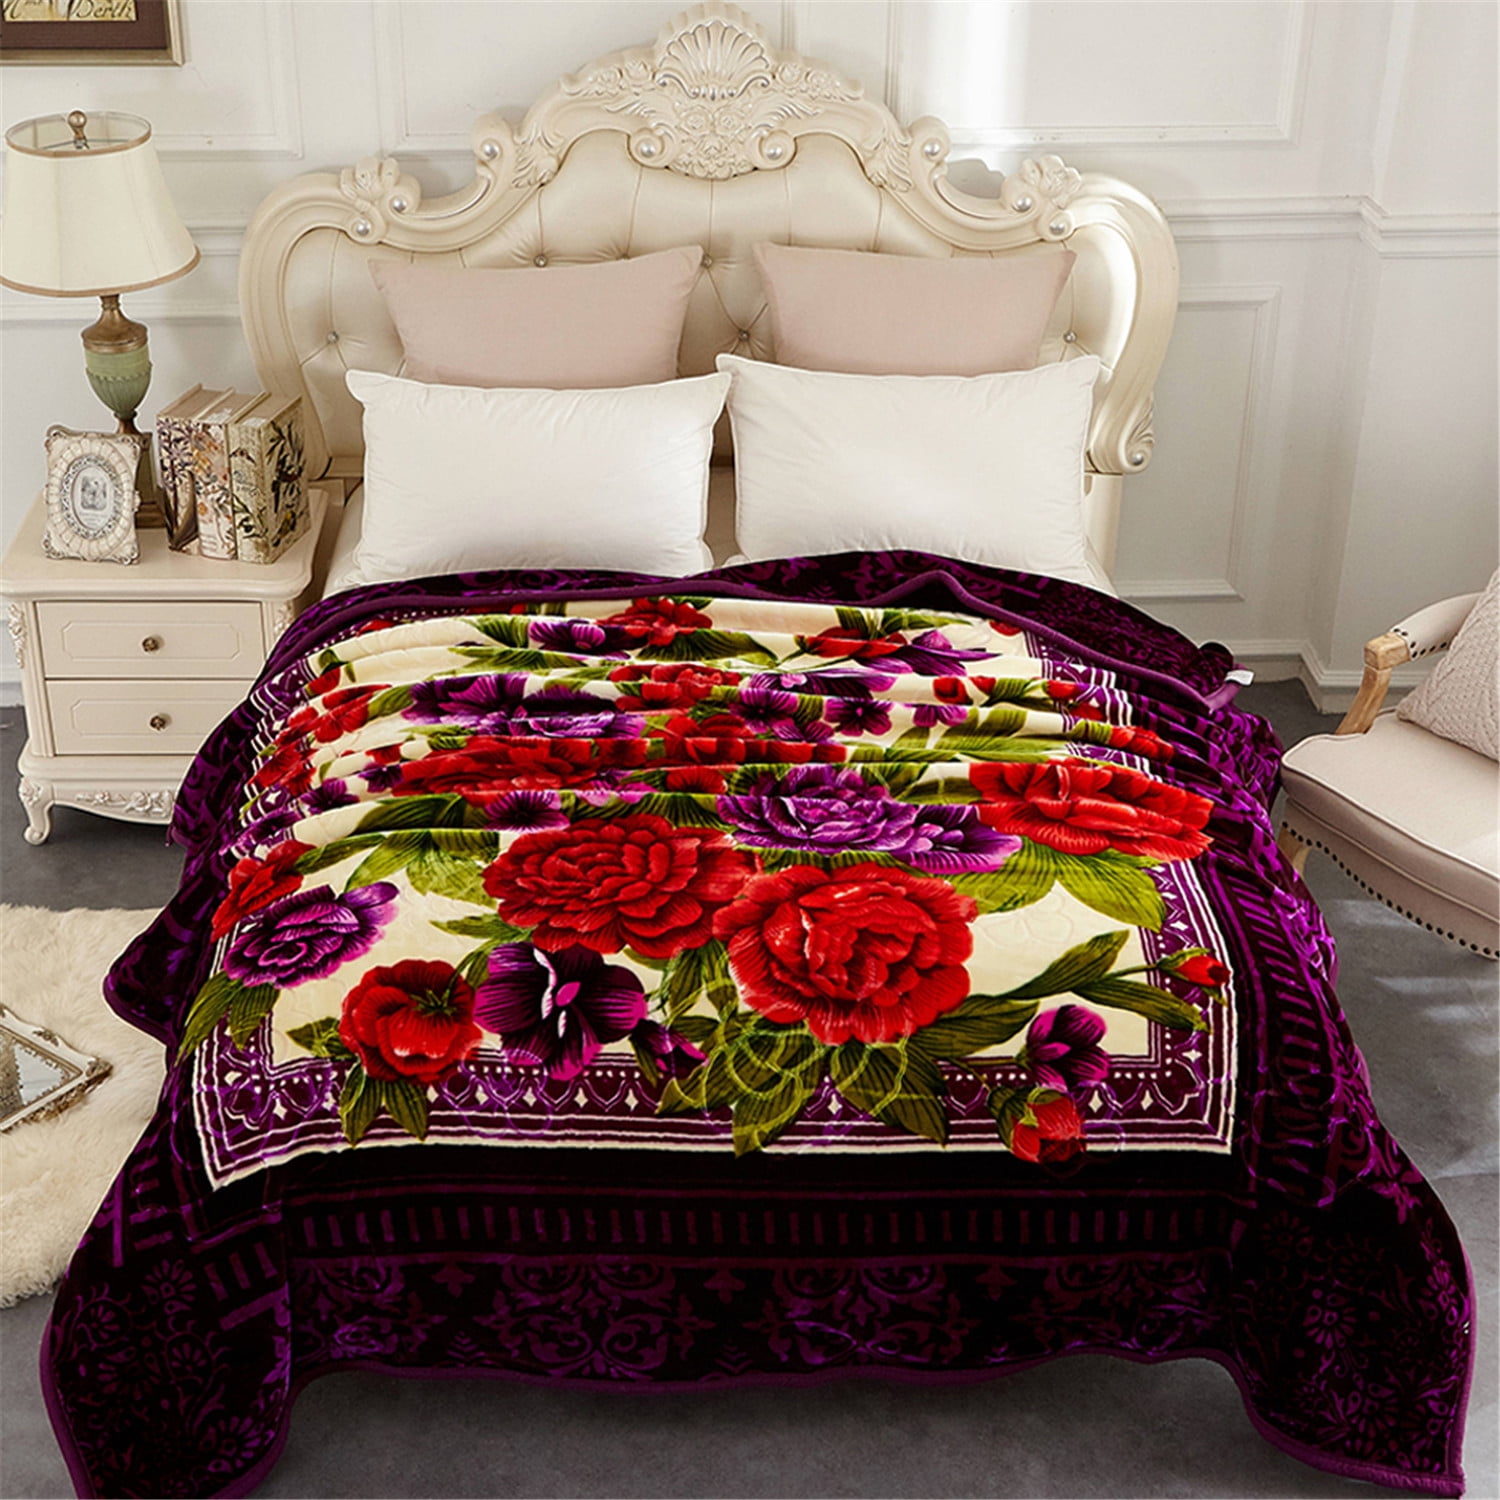 Best Soft Heavy Blanket Purple Woven Sensory 102 x 90 Inch Thick Plush Blanket 